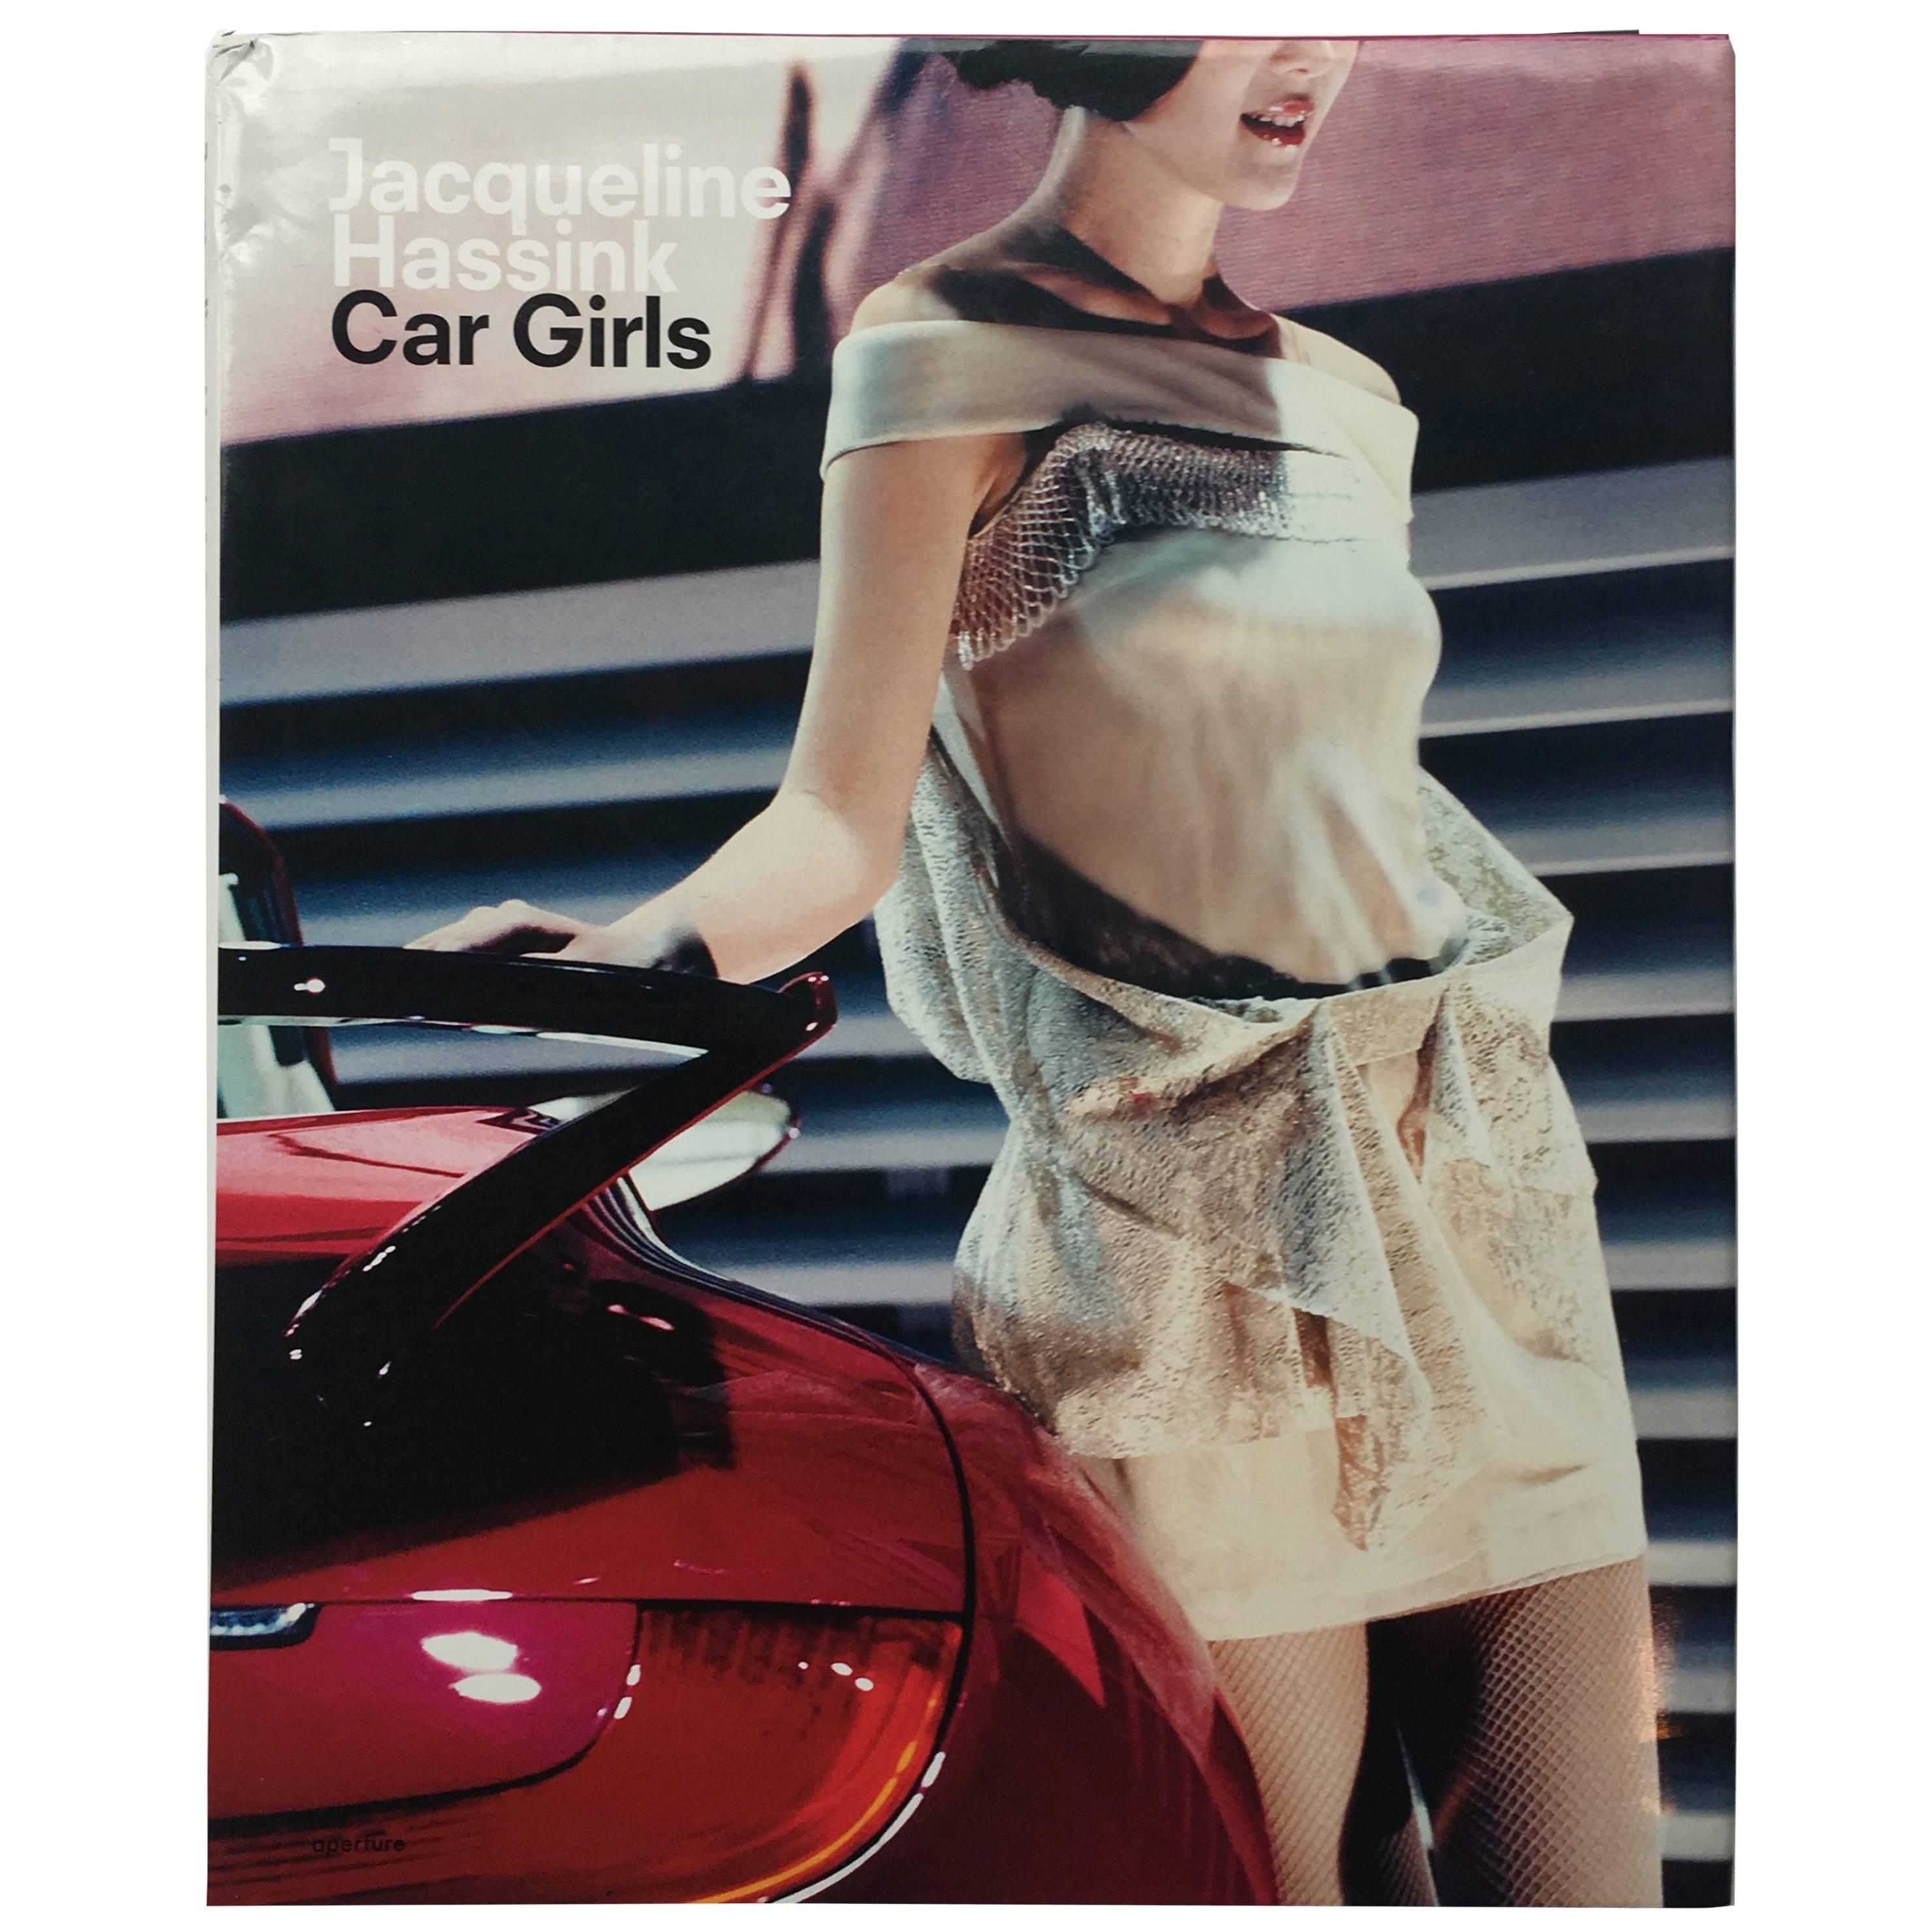 Car Girls - Jacqueline Hassink - 1st Edition, Aperture, 2009